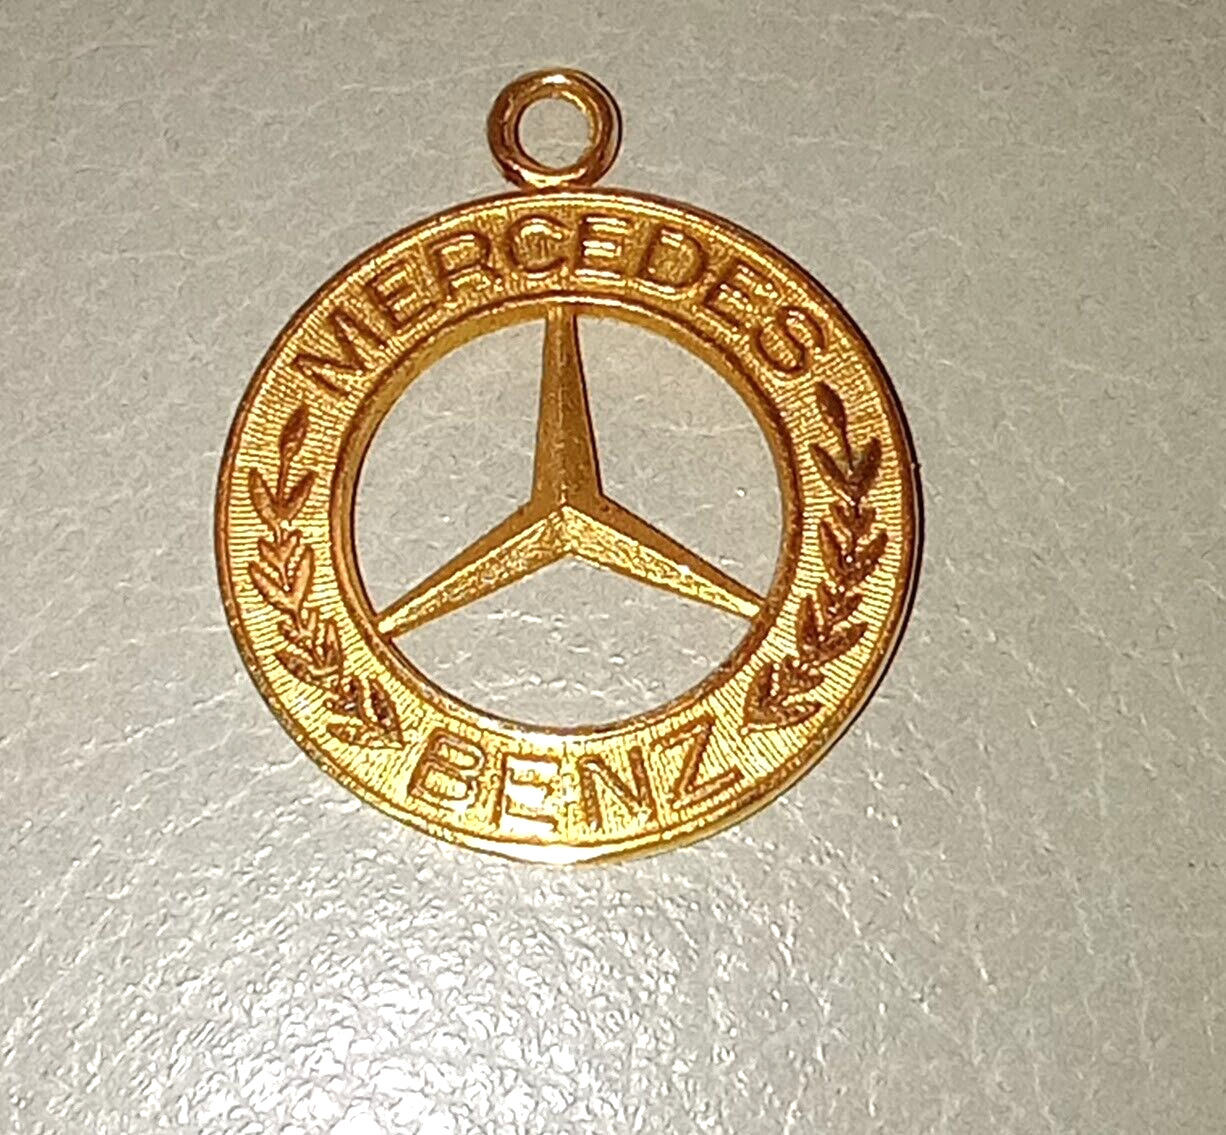 14kt yellow gold Mercedes Benz emblem charm/pendant double sided emblem gorgeous